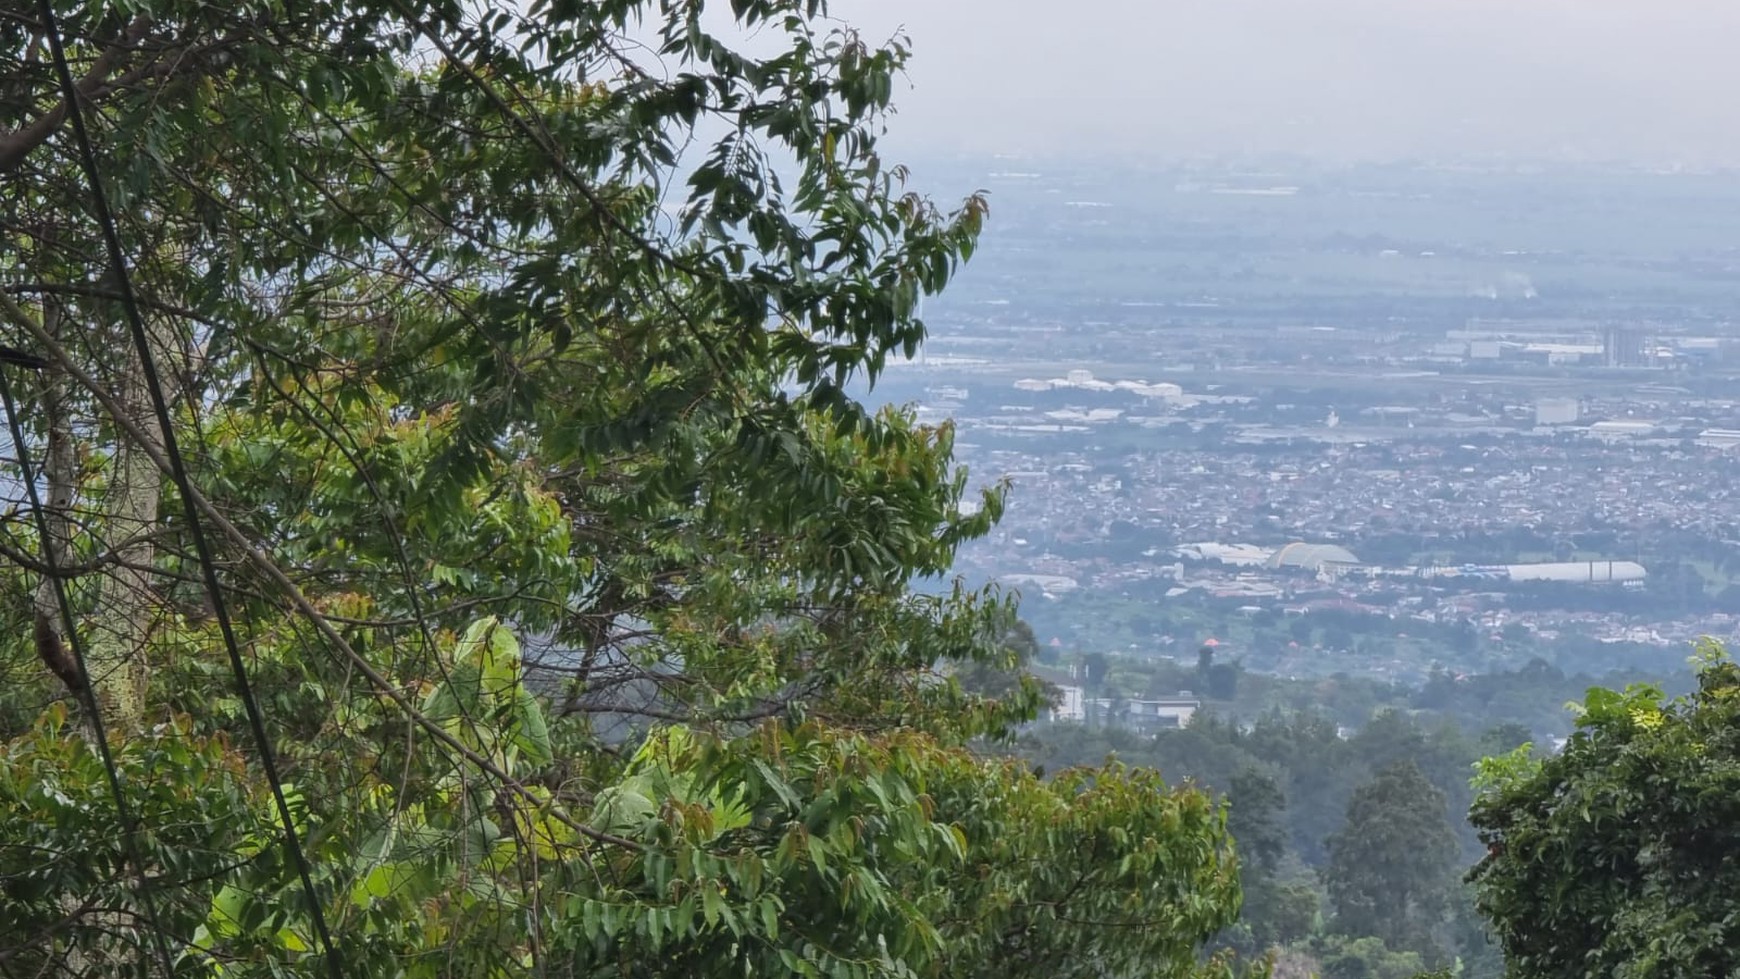 Dijual Tanah kosong 5000m2 view gunung & kota di Lembang Bandung